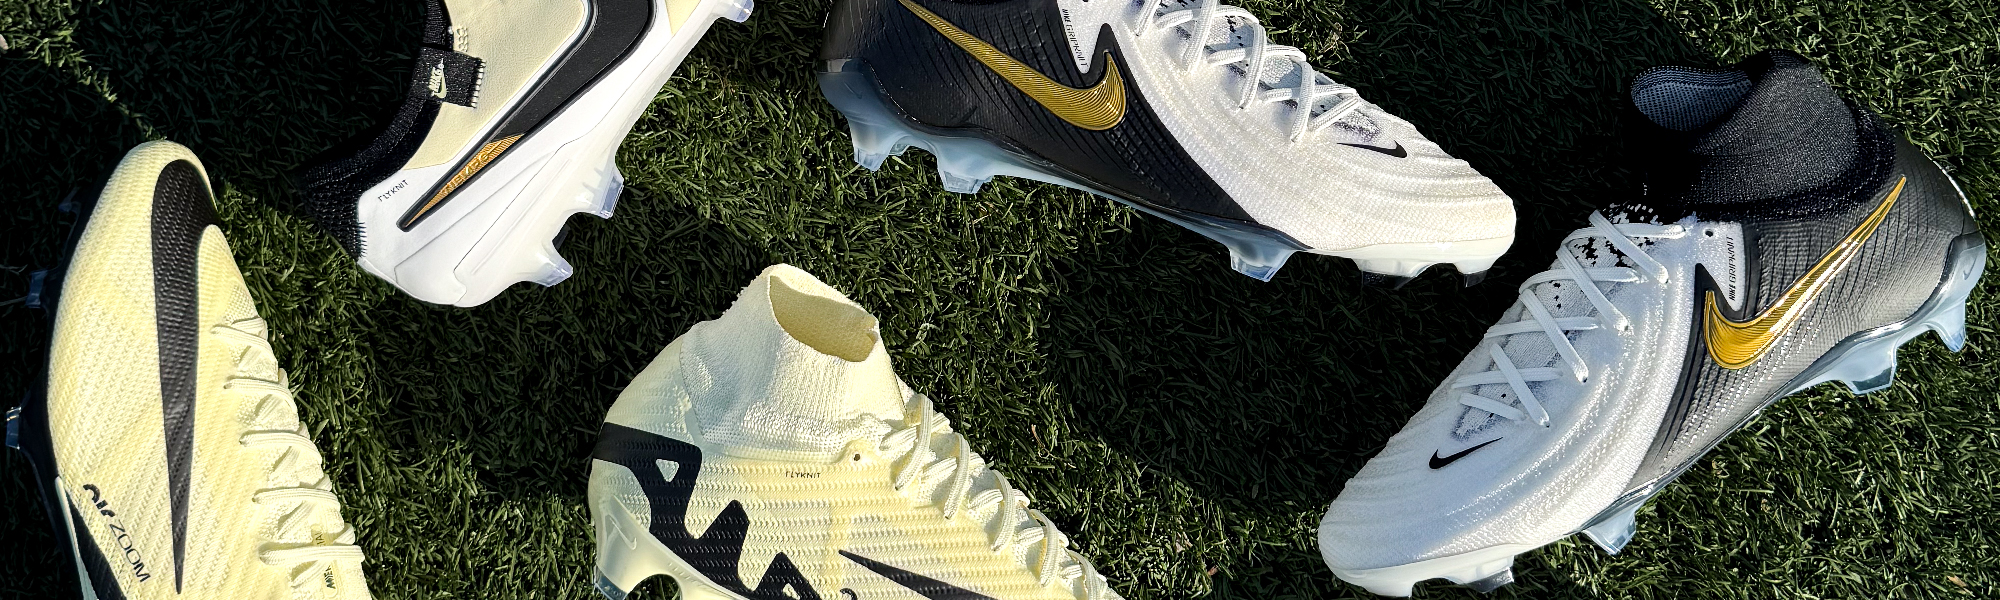 The Best Nike Football Boots. Nike CA